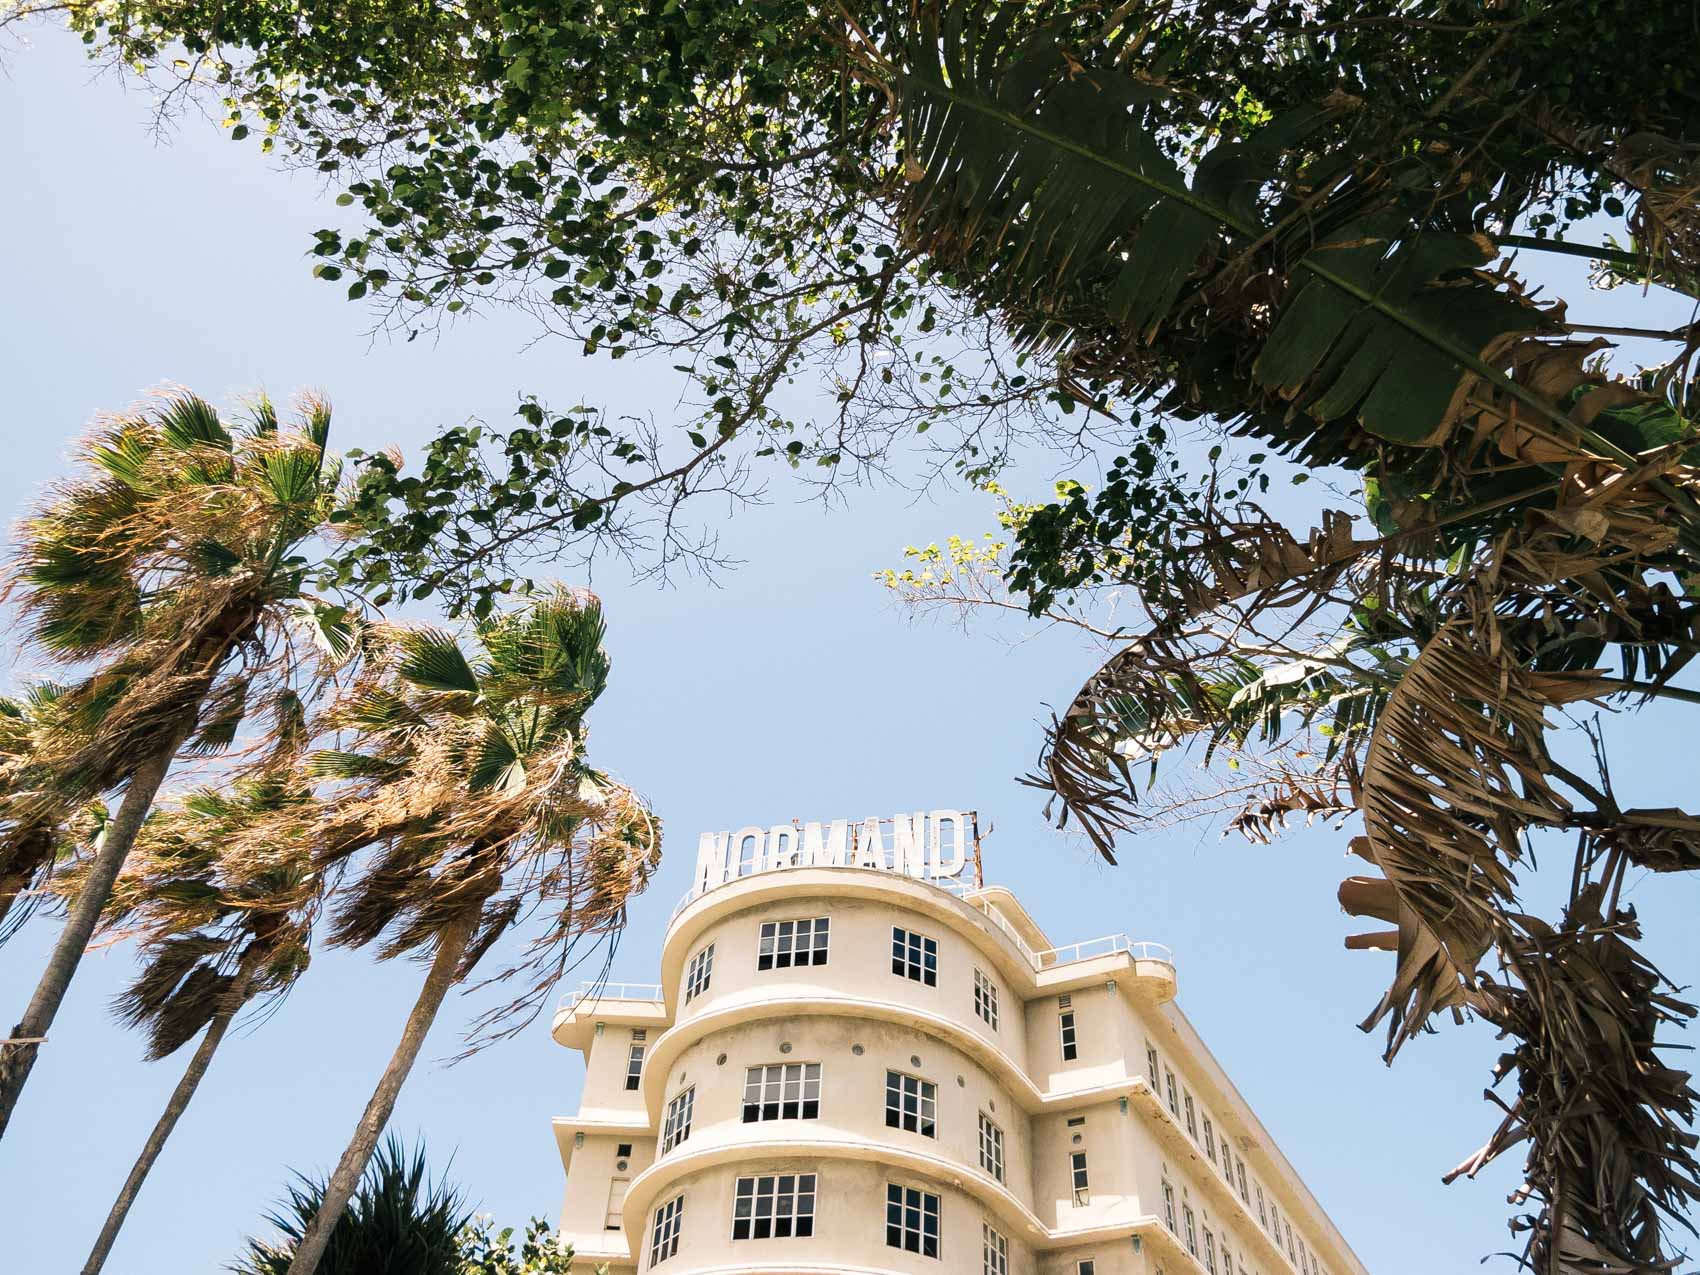 Retro, midcentury, art deco, vintage architecture design of the Normand building in San Juan, Puerto Rico